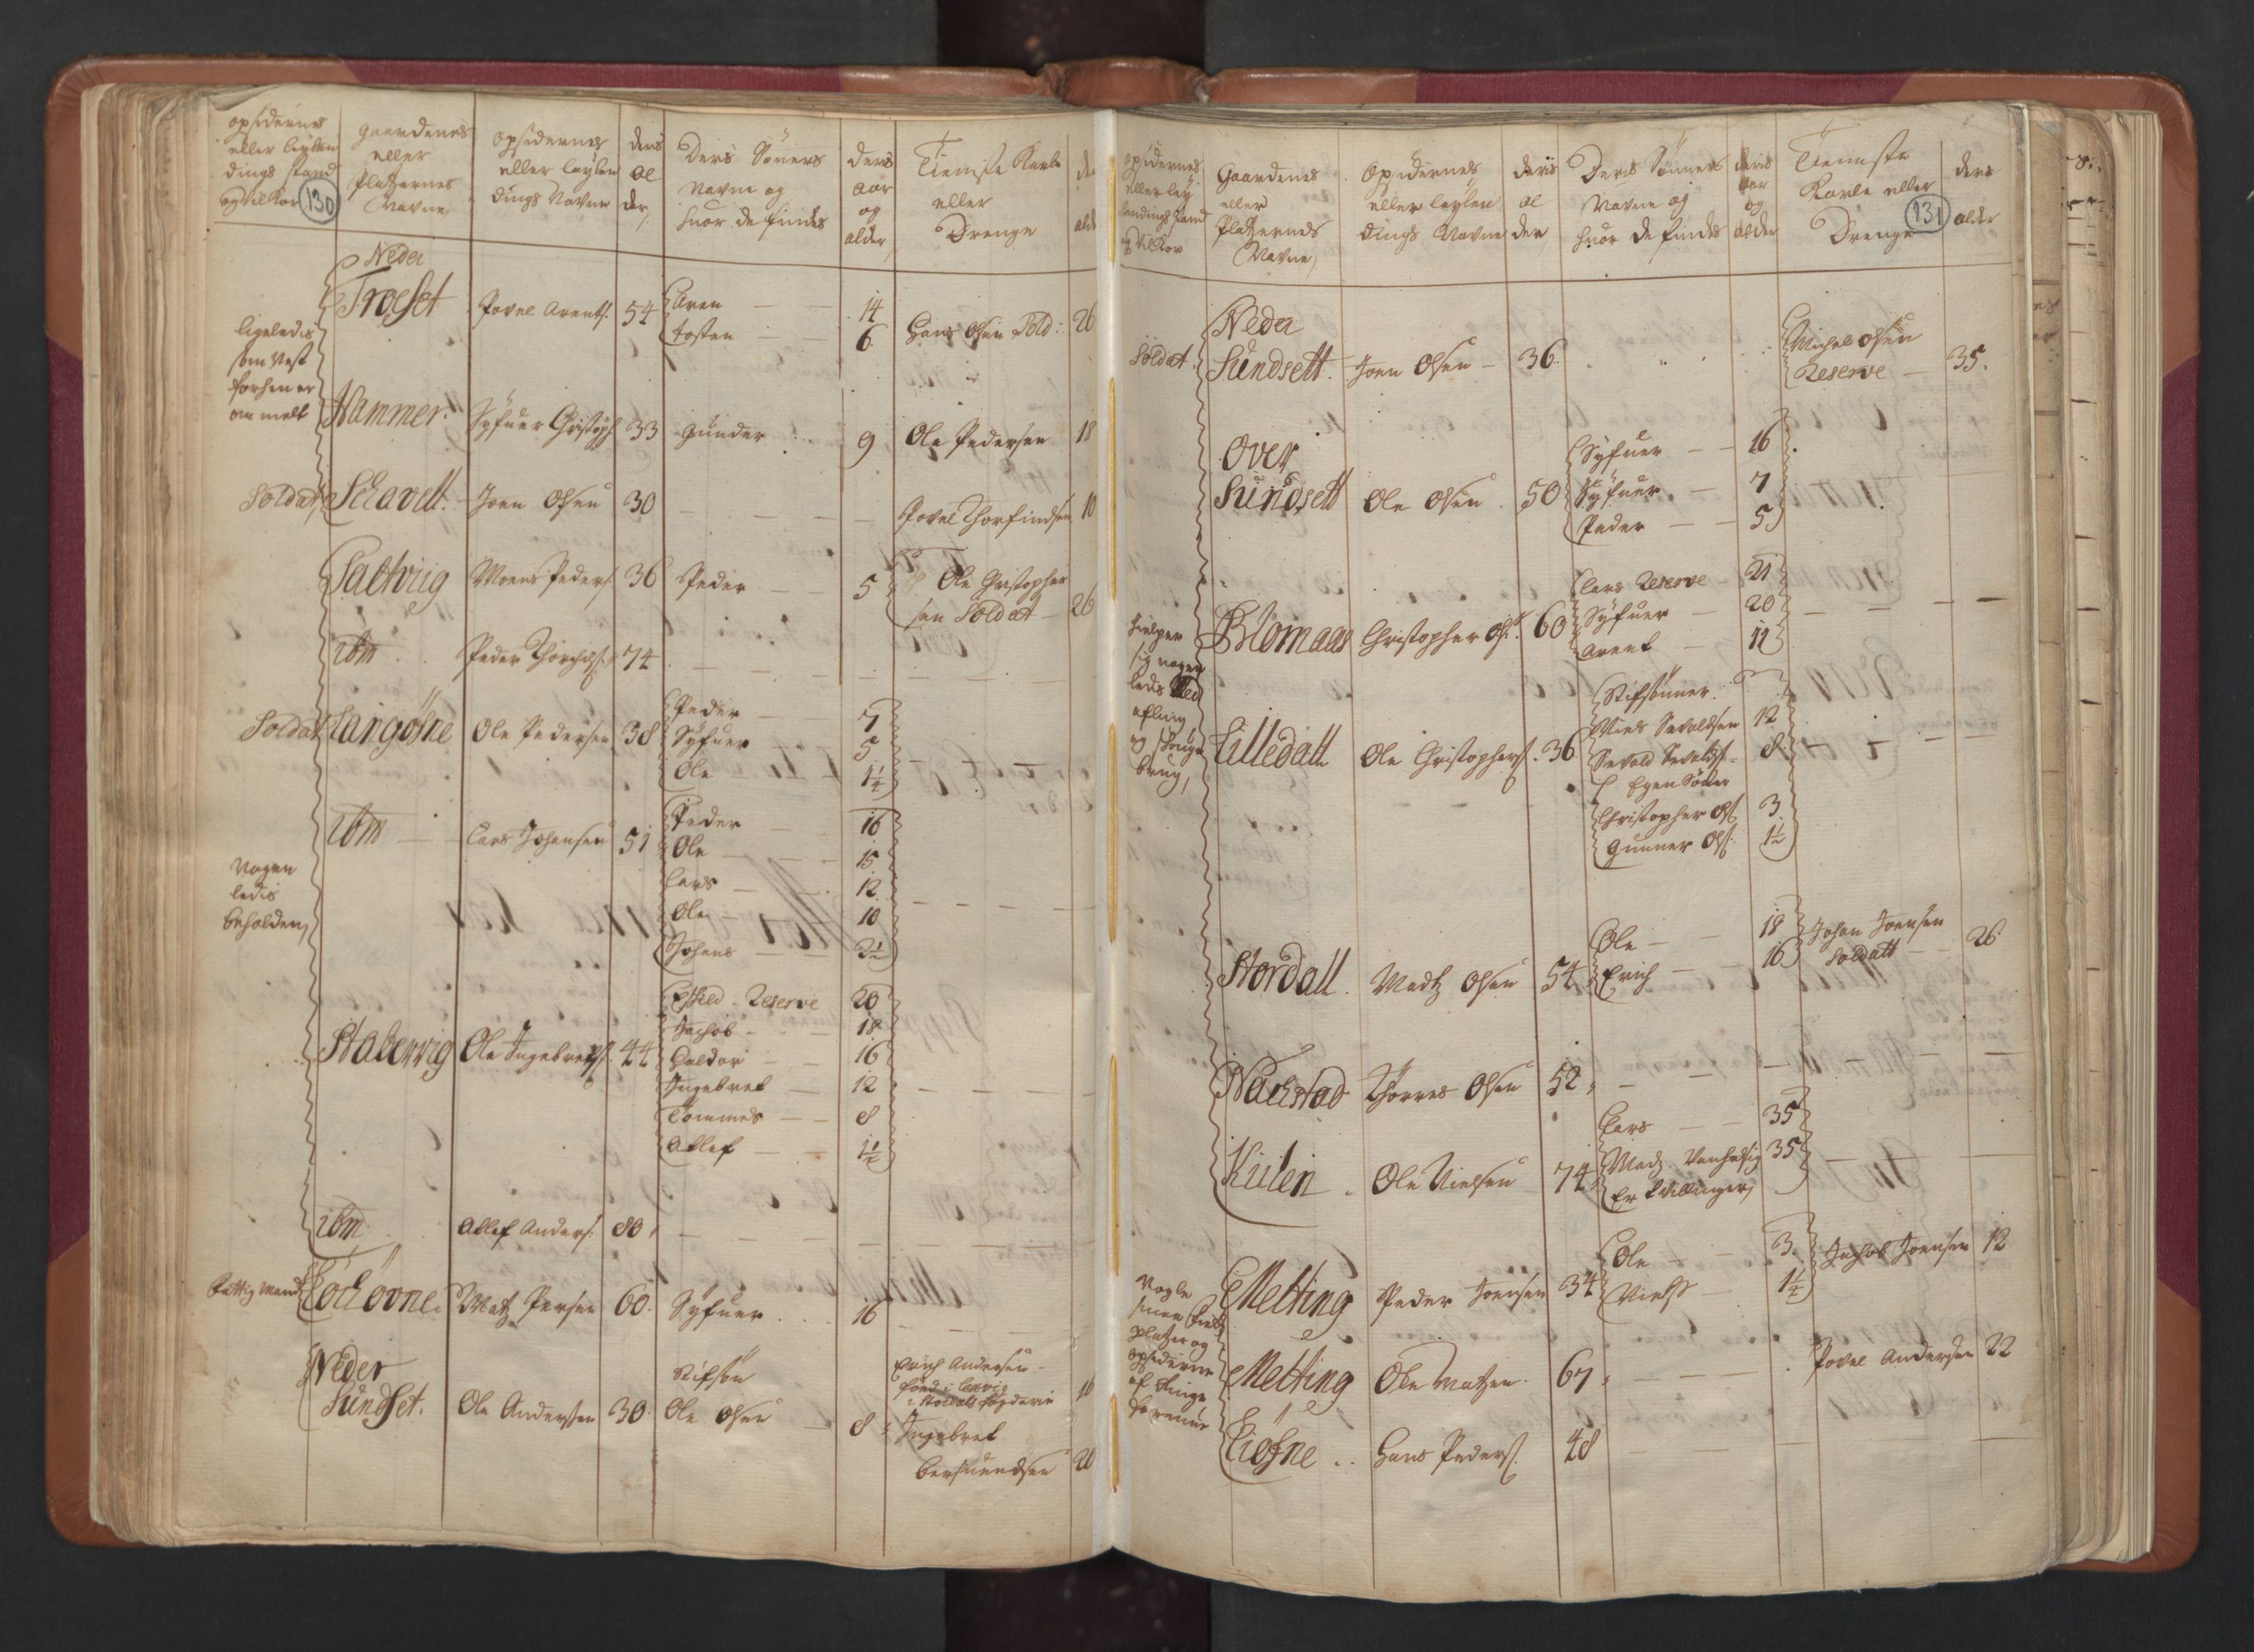 RA, Census (manntall) 1701, no. 15: Inderøy fogderi and Namdal fogderi, 1701, p. 130-131